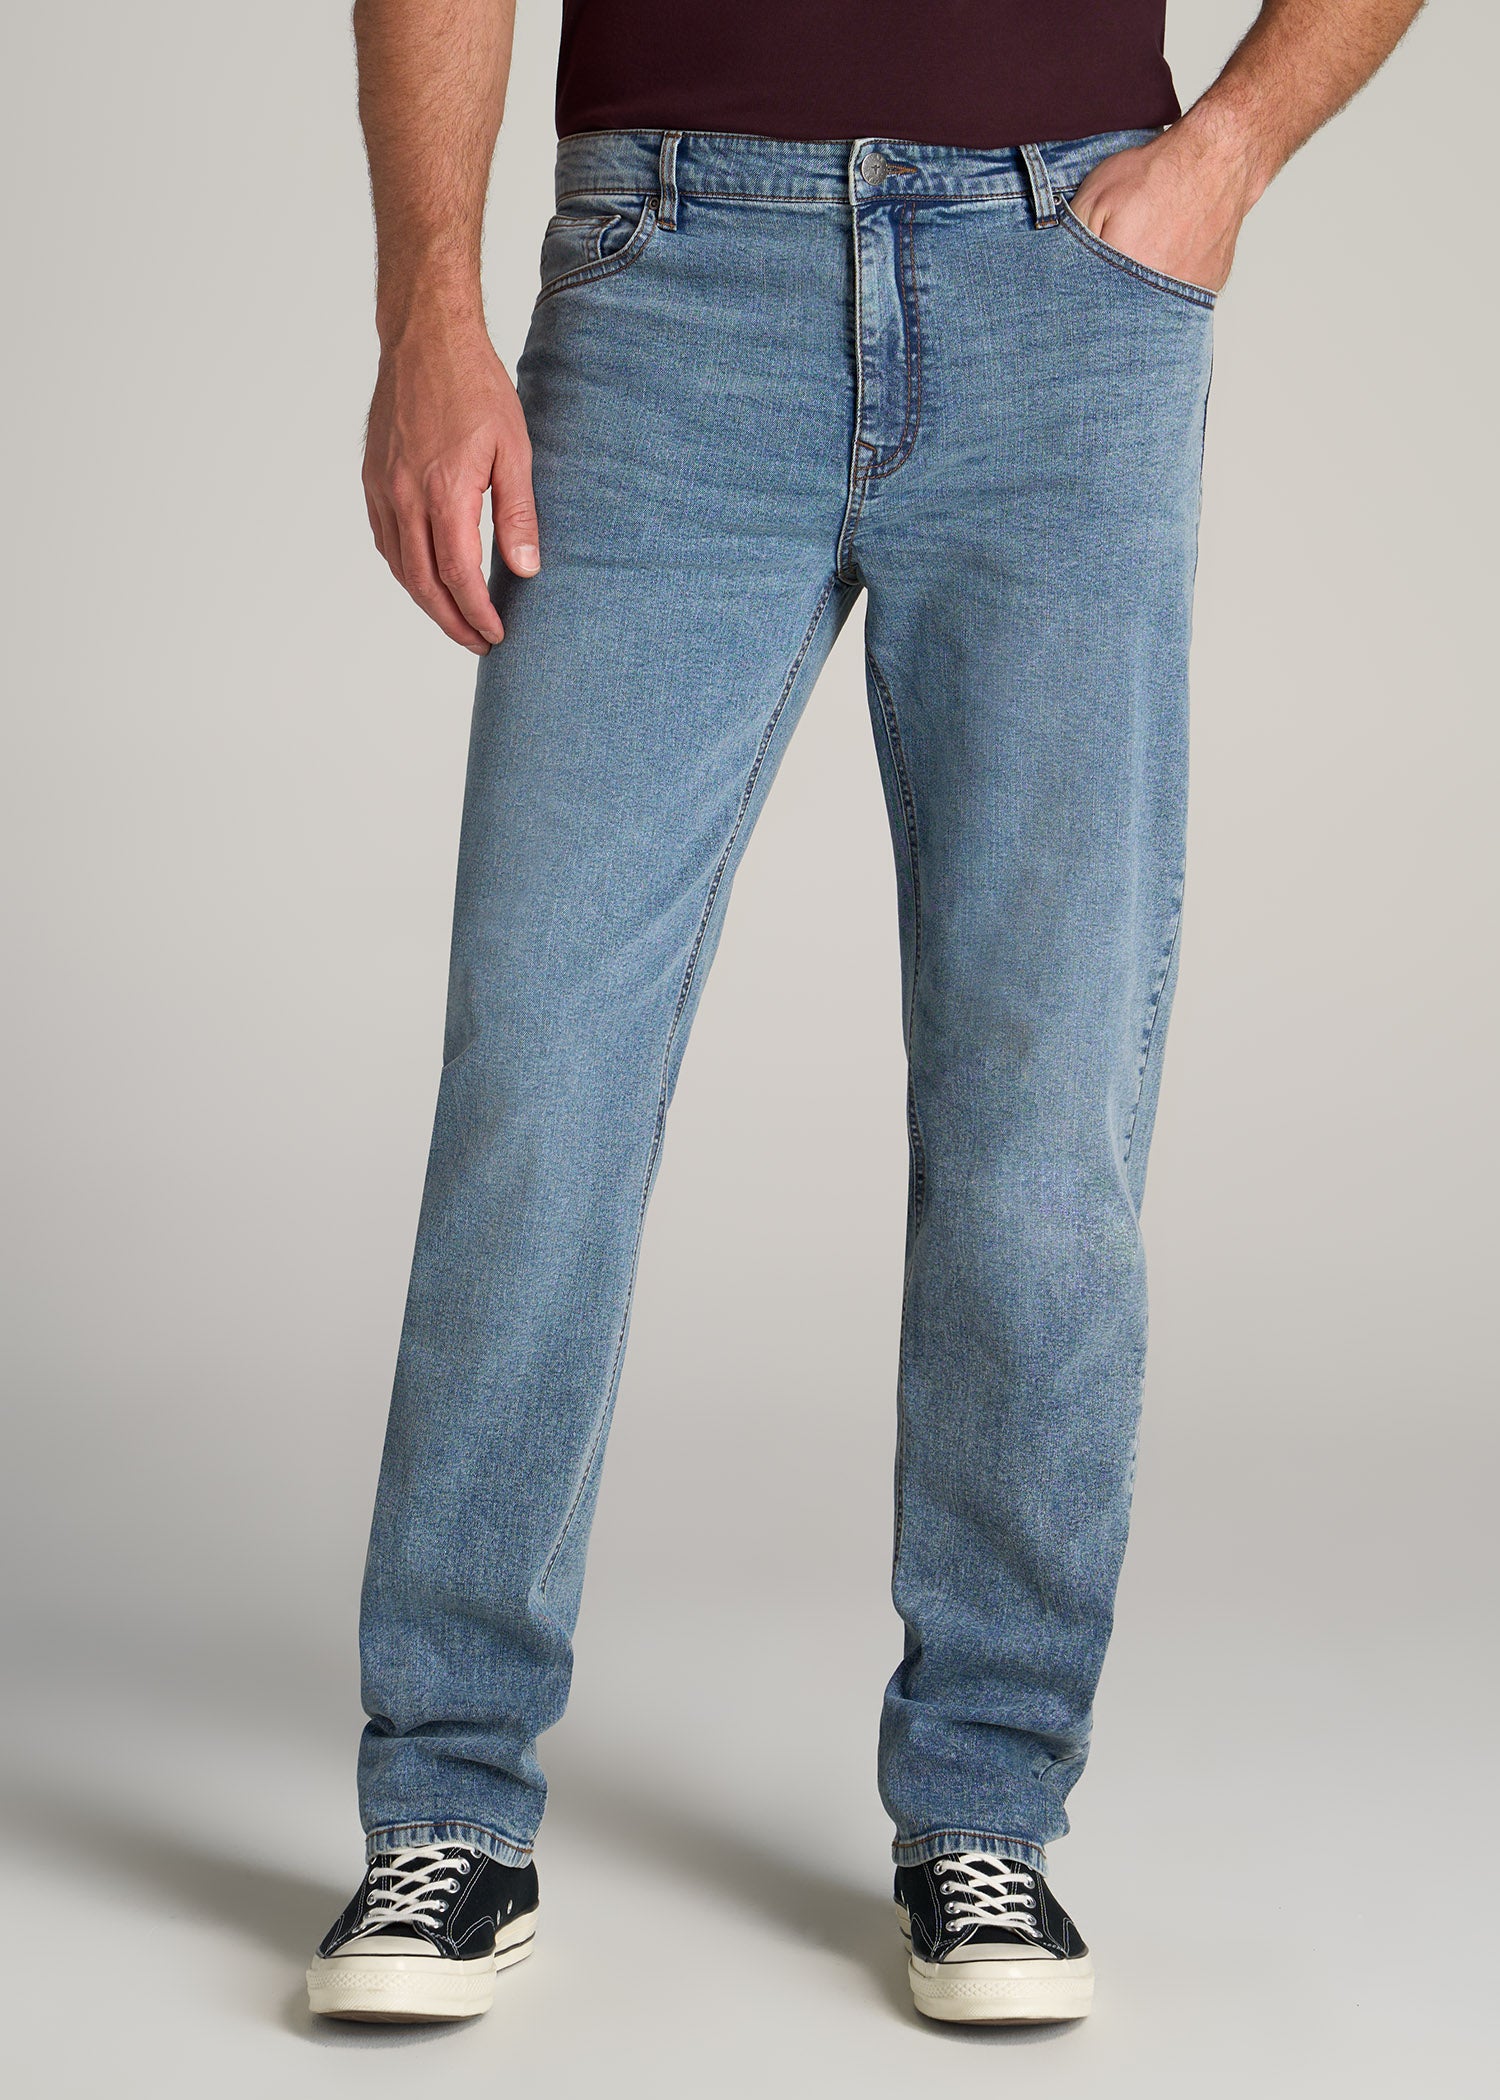 Men's Jeans: Straight Fit